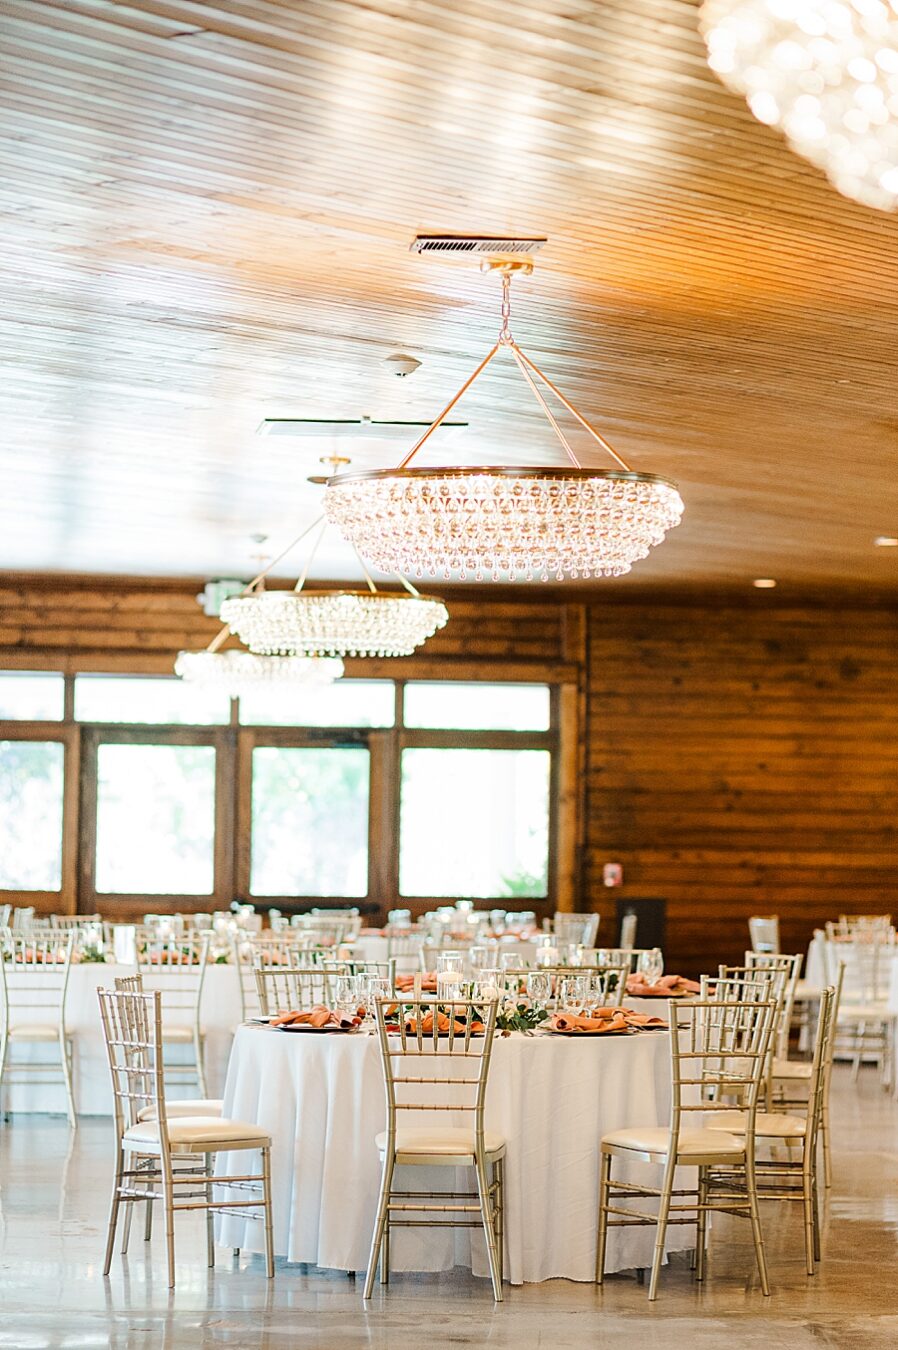 Tables and chairs at reception of wedding by Amanda May Photos